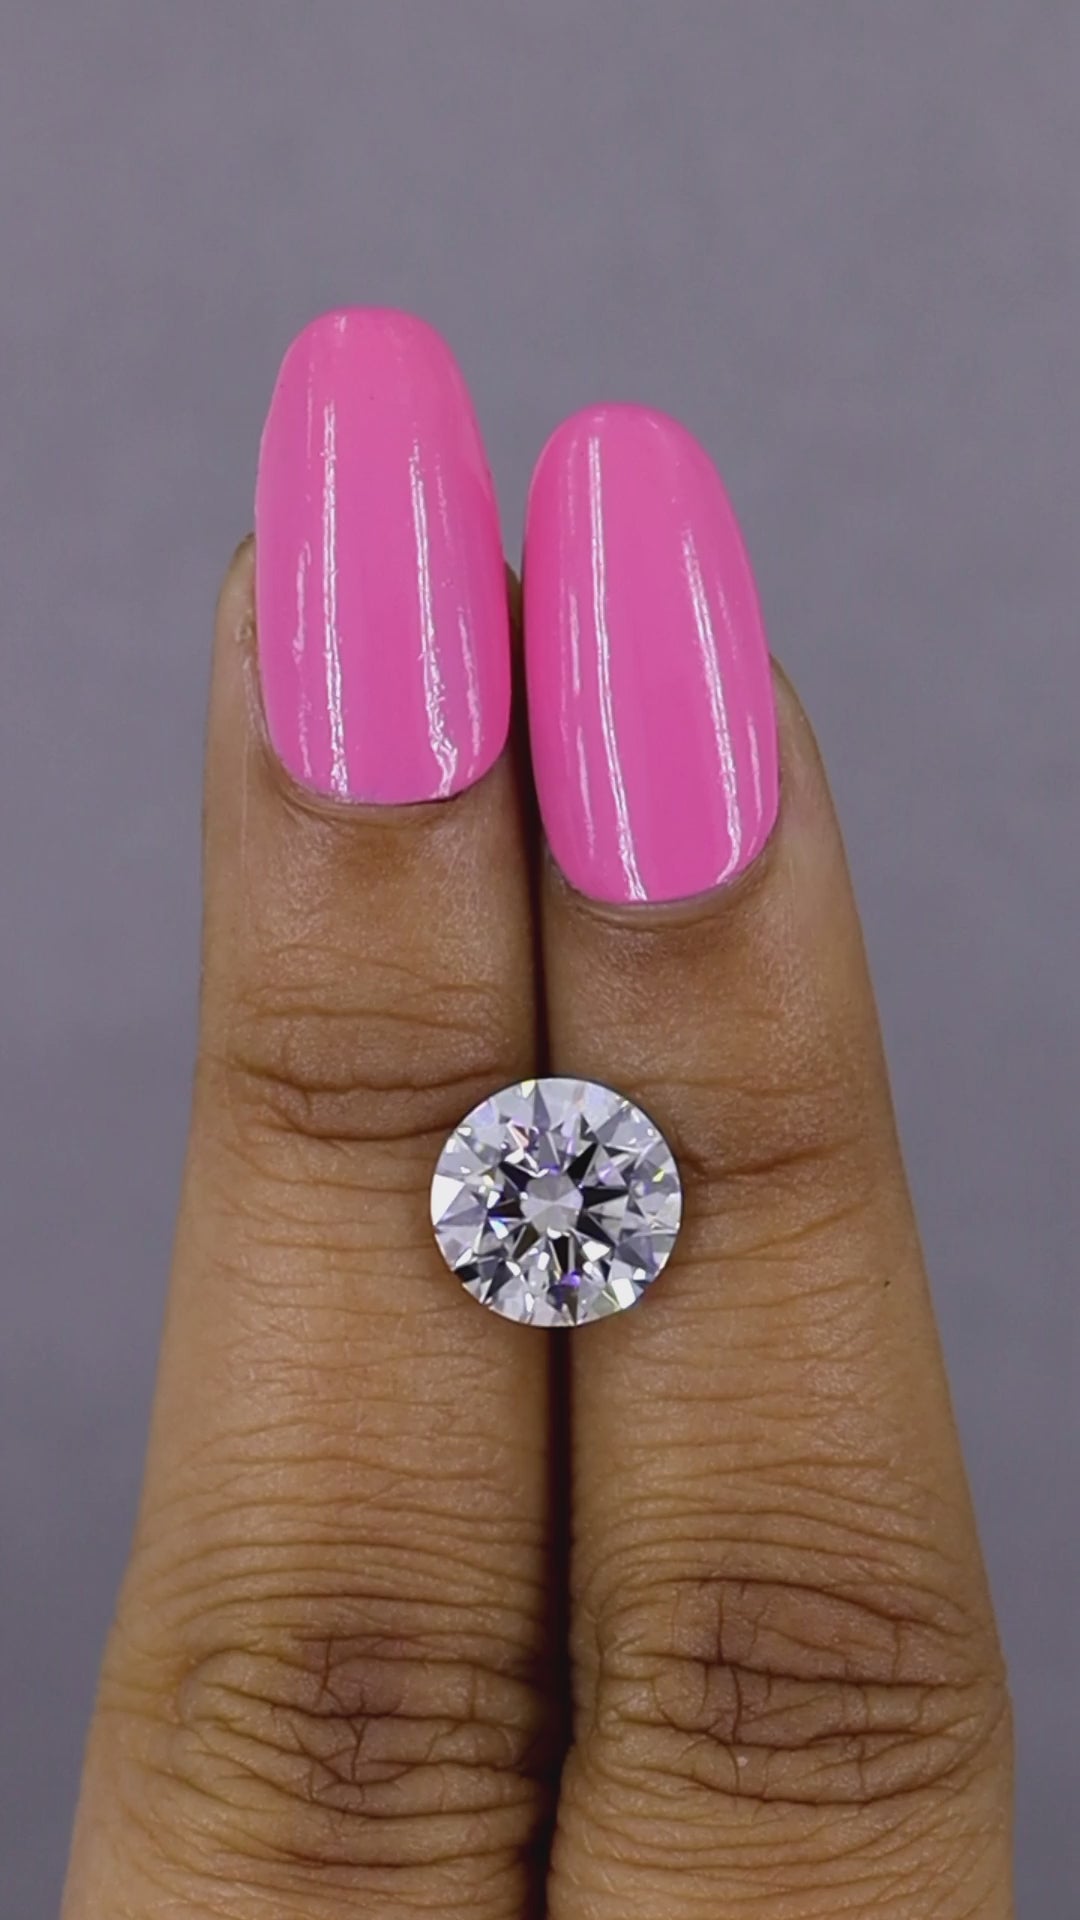 Unrivaled 3.15-Carat Signature Diamond D FL is as rare as it is beautiful